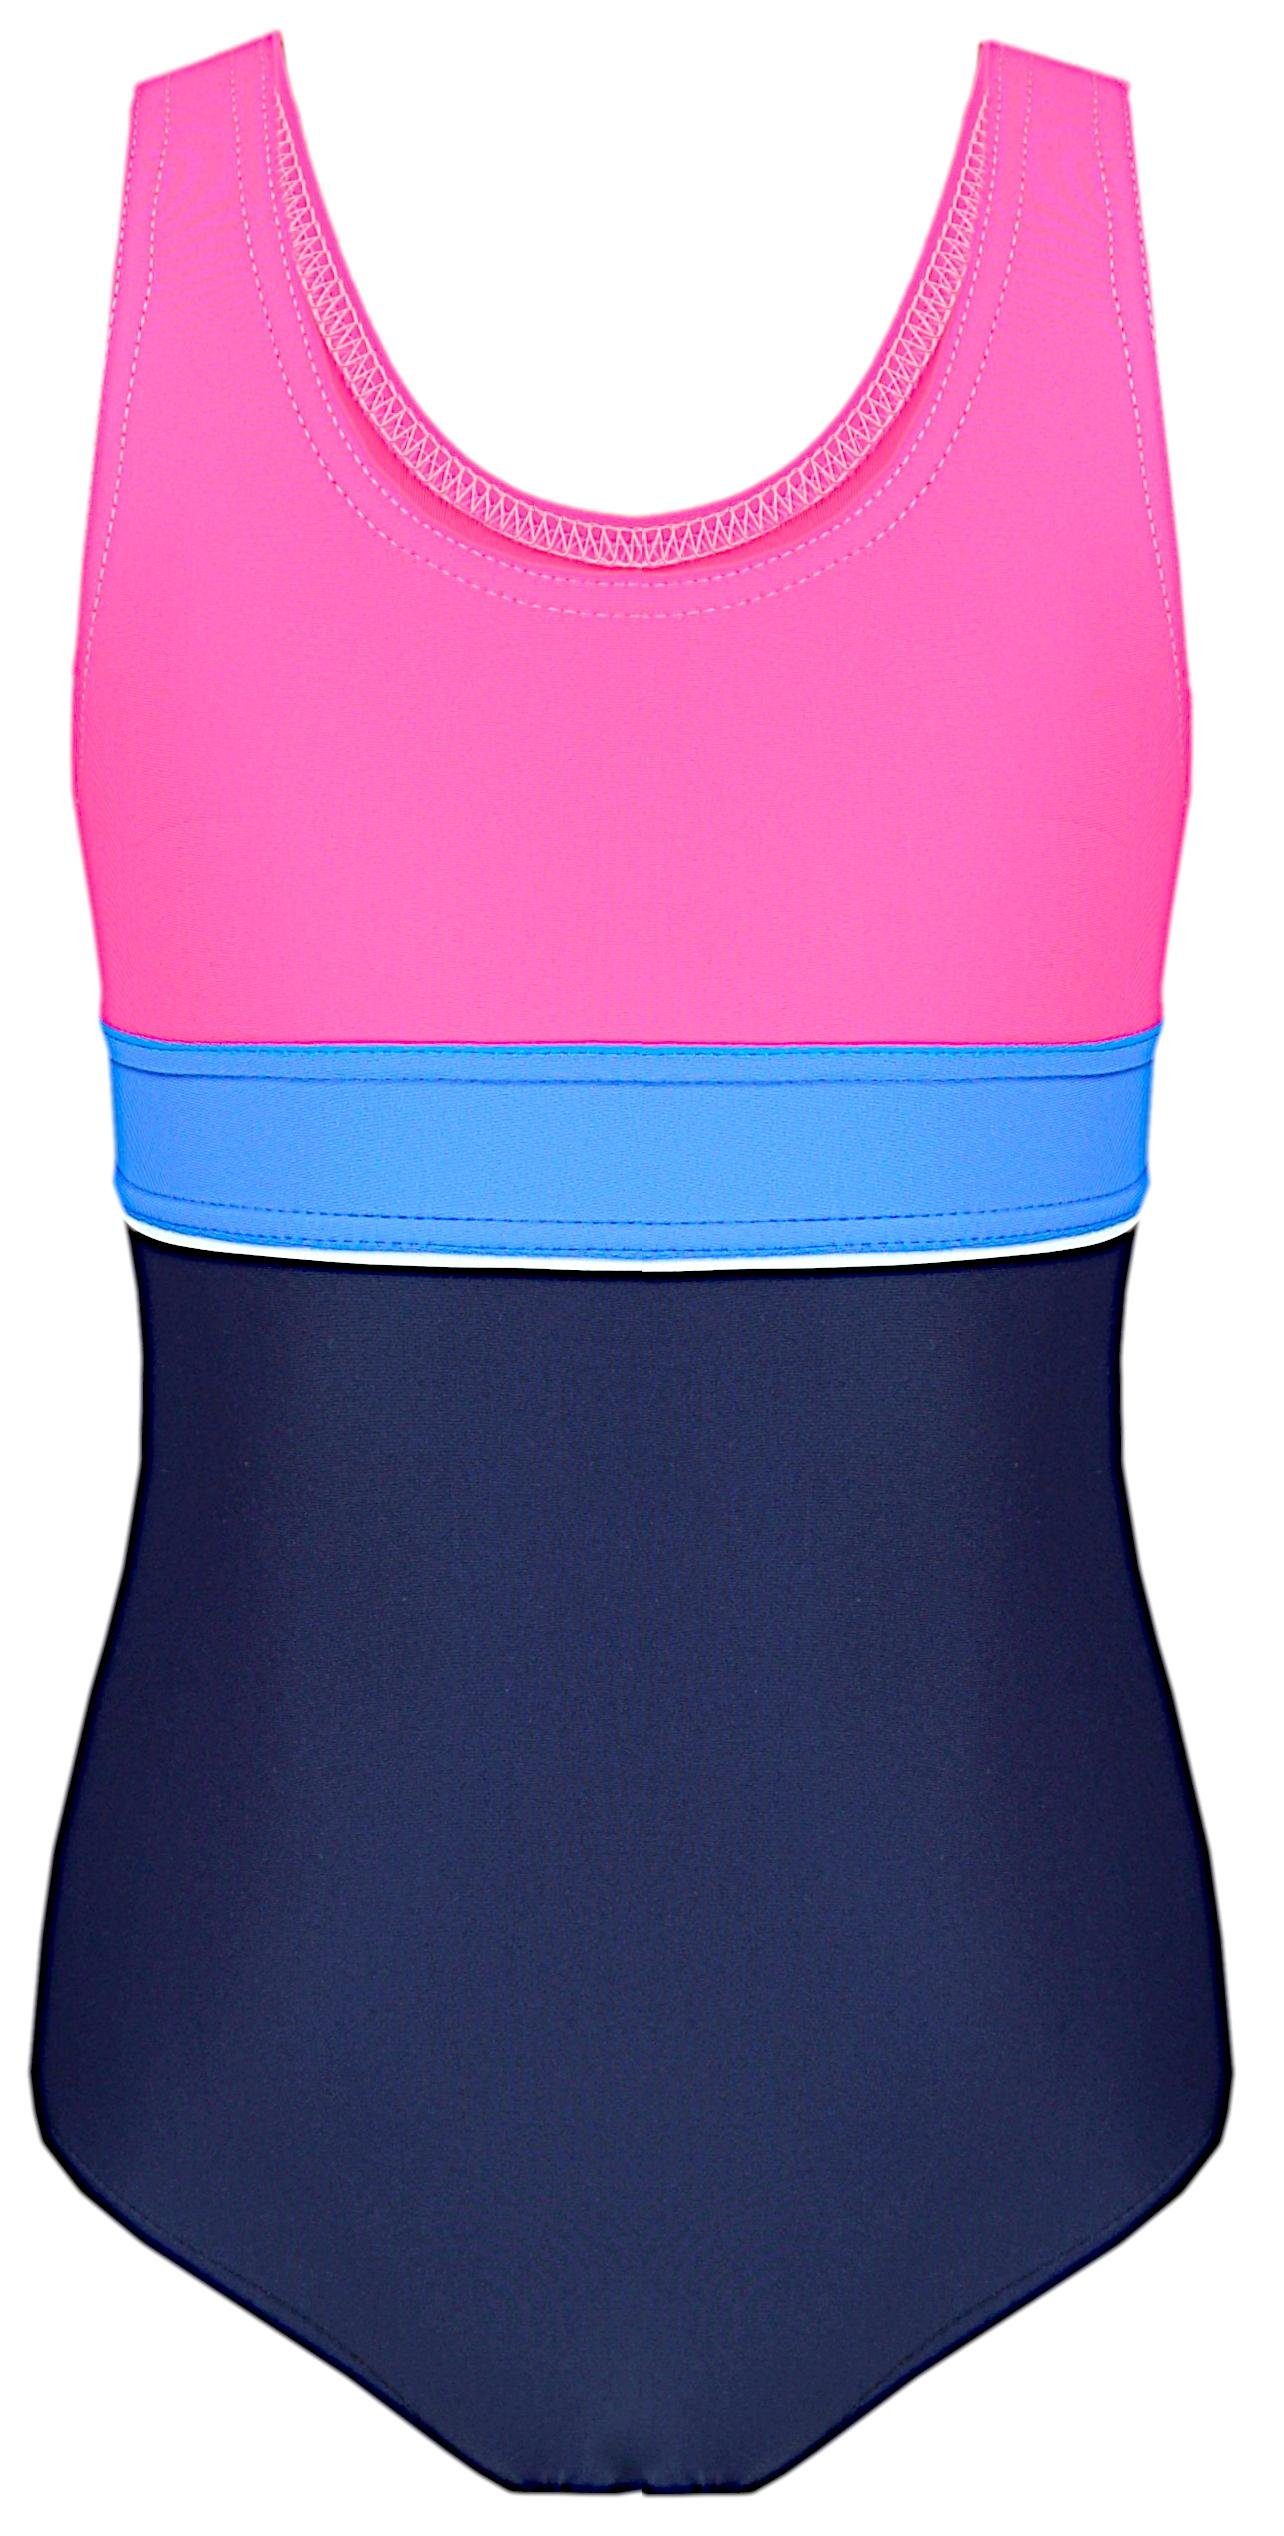 Aquarti Badeanzug / Dunkelblau Ringerrücken mit Blau 025 Pink Aquarti Mädchen / Badeanzug